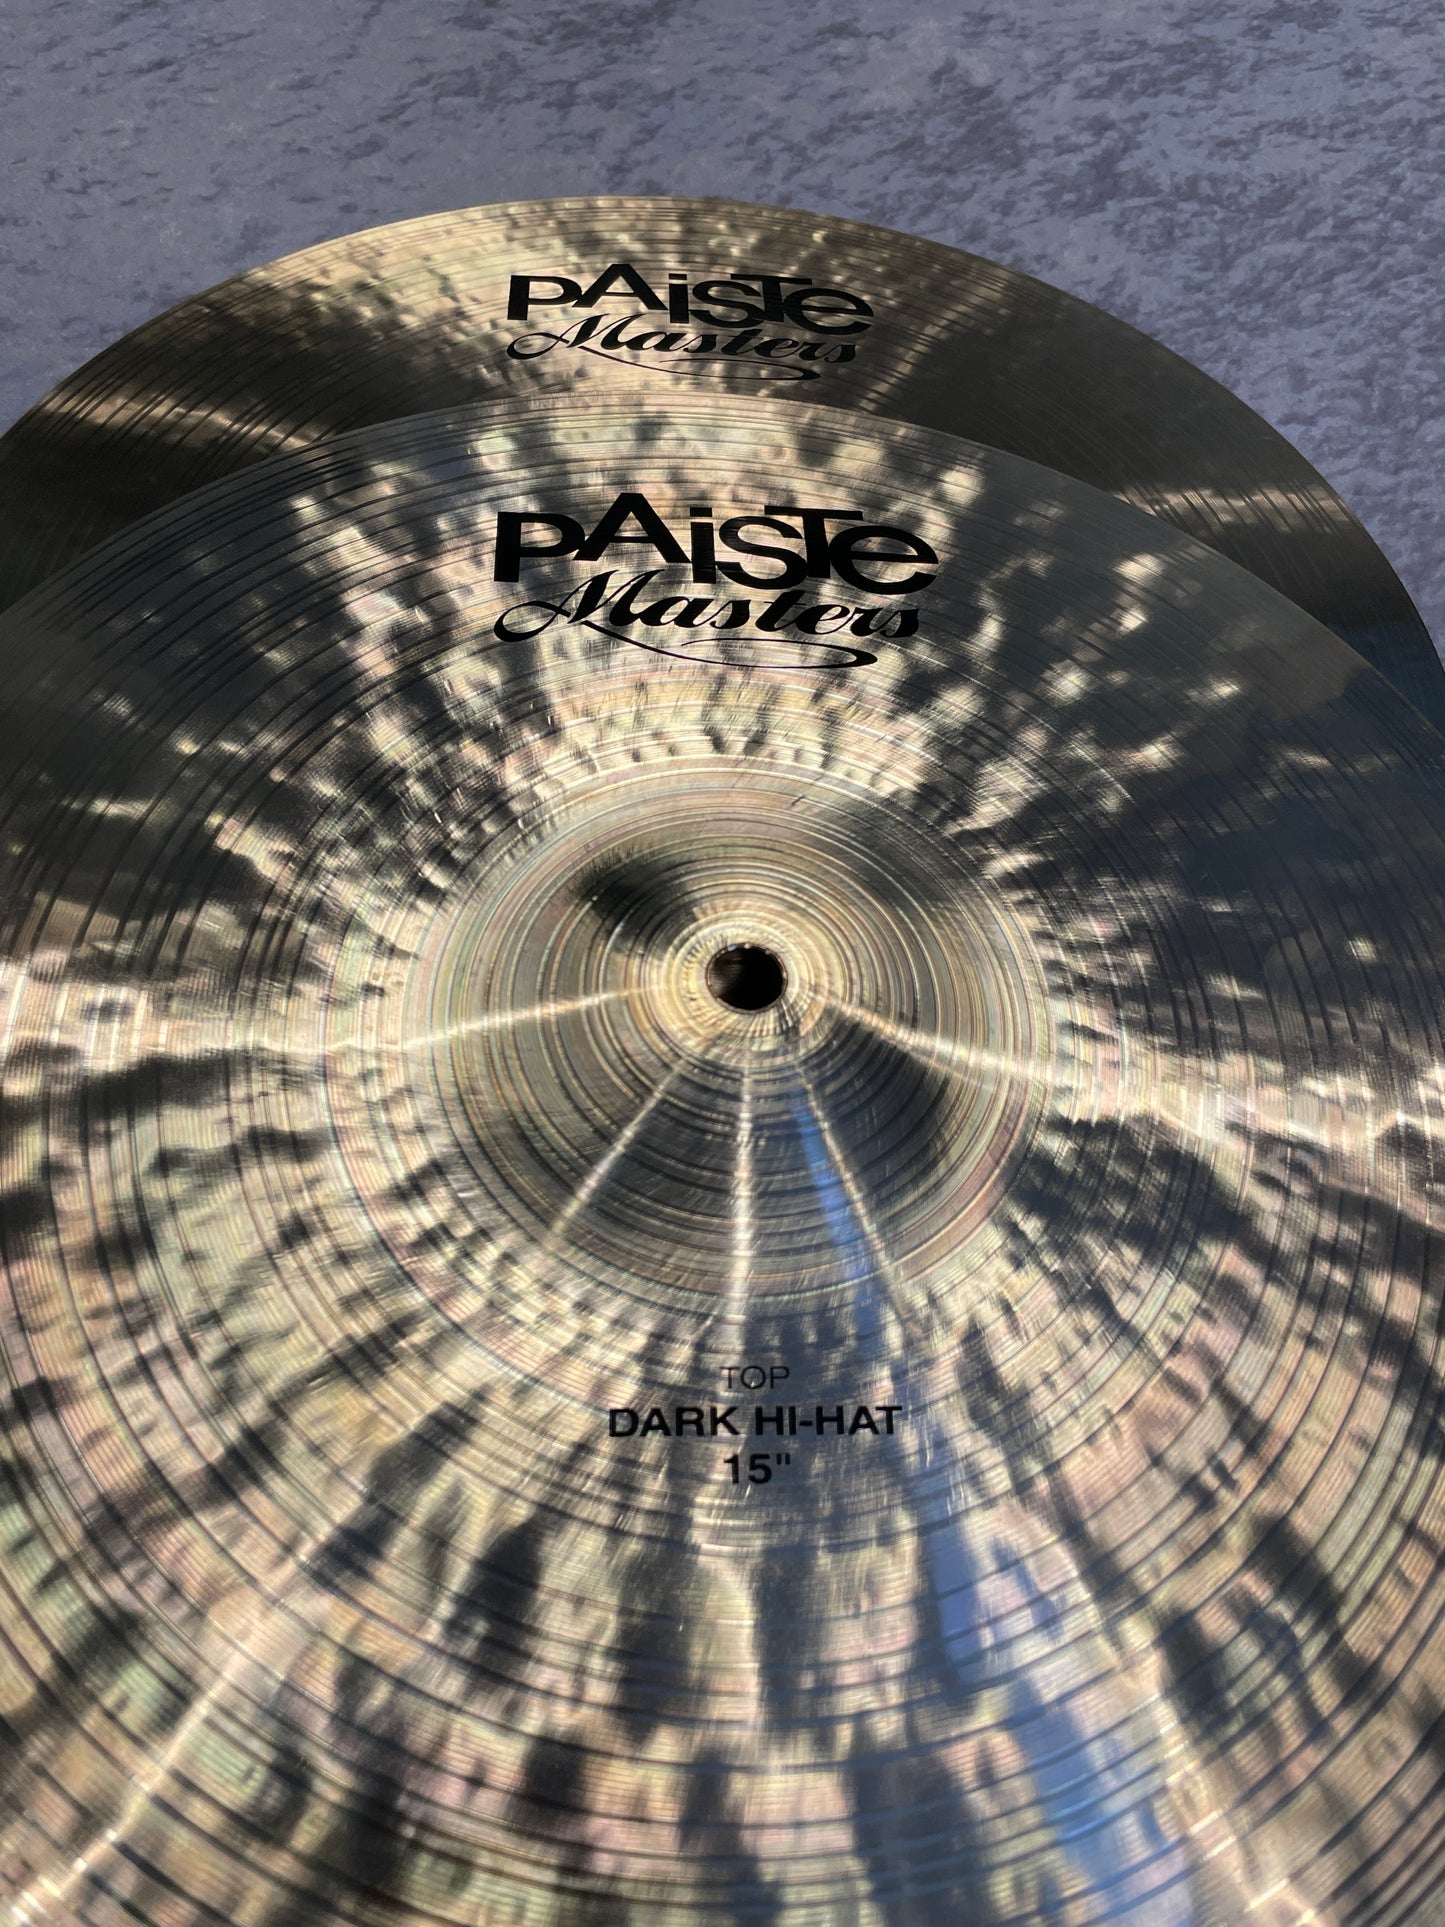 15" Paiste Masters Dark Hi-Hat Cymbal Pair 906g/1390g